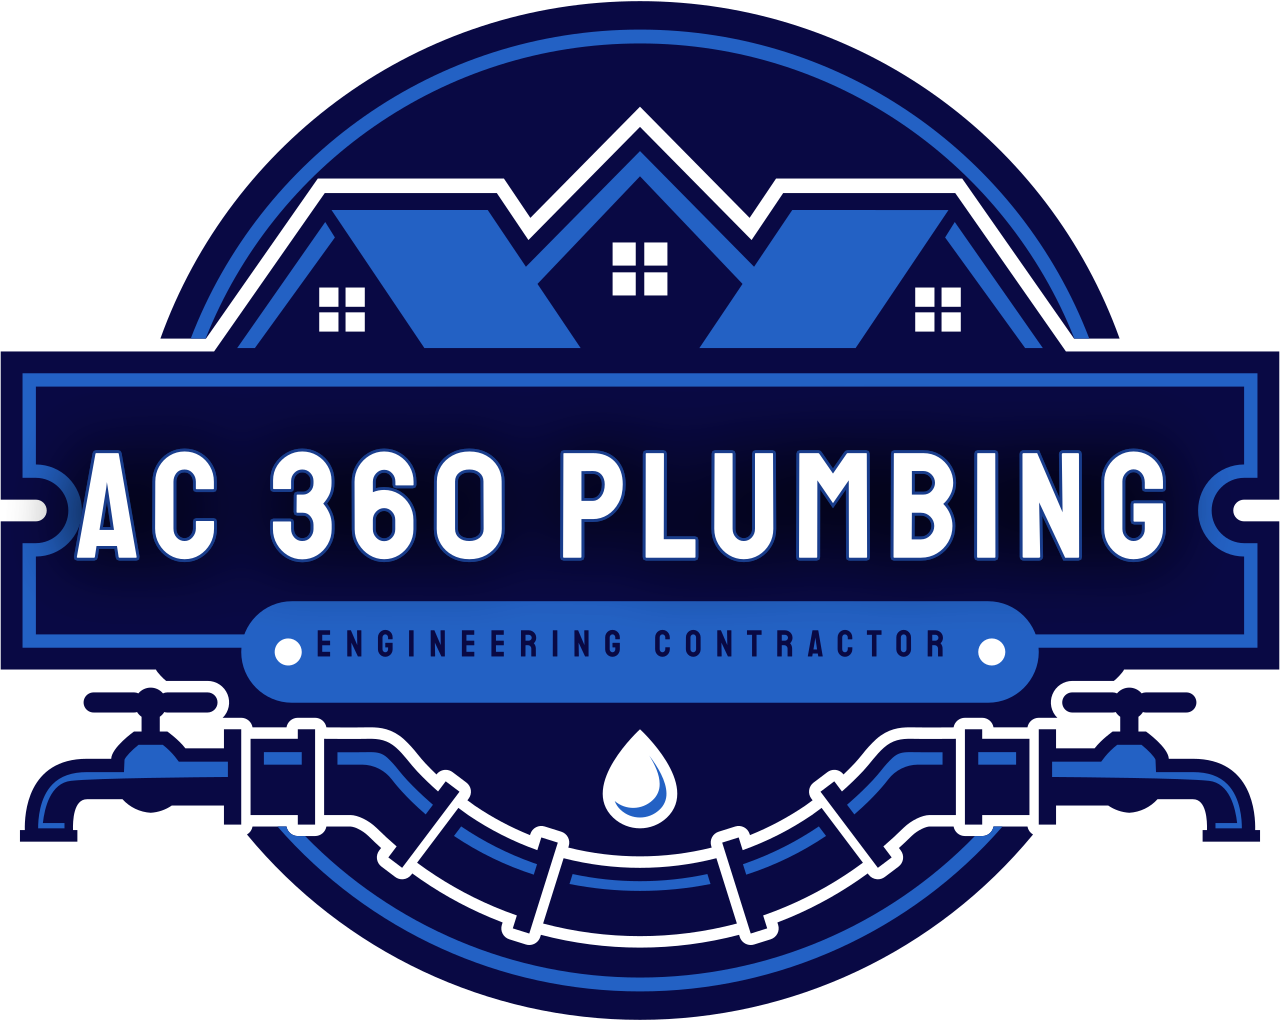 AC 360 PLUMBING 's logo